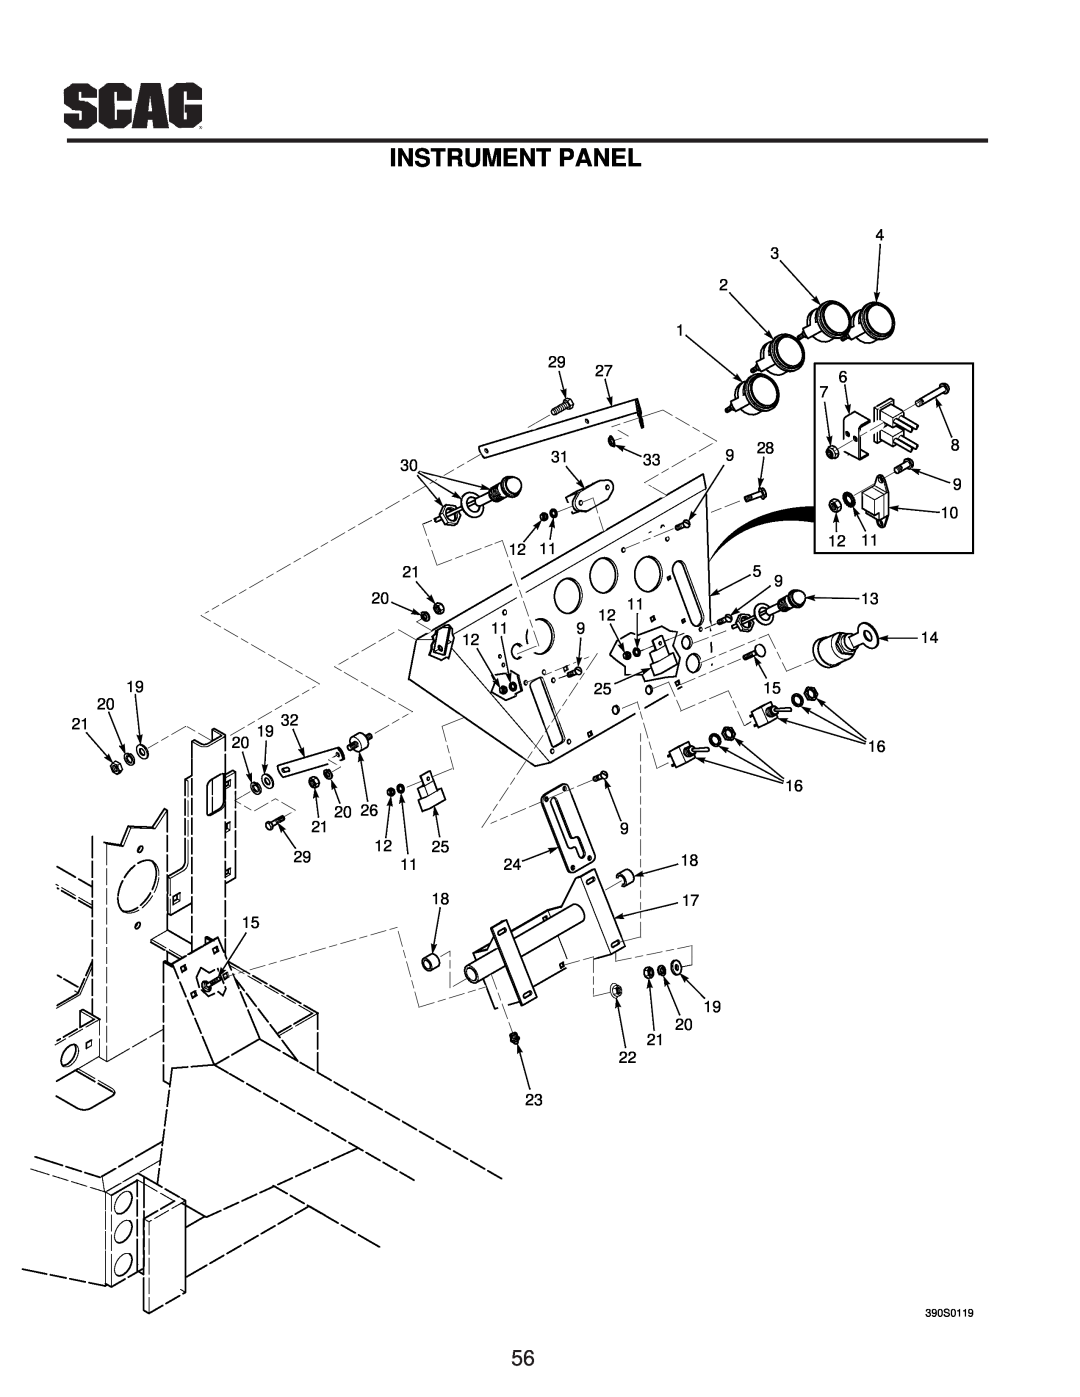 Scag Power Equipment MAG manual Instrument Panel, 390S0119 